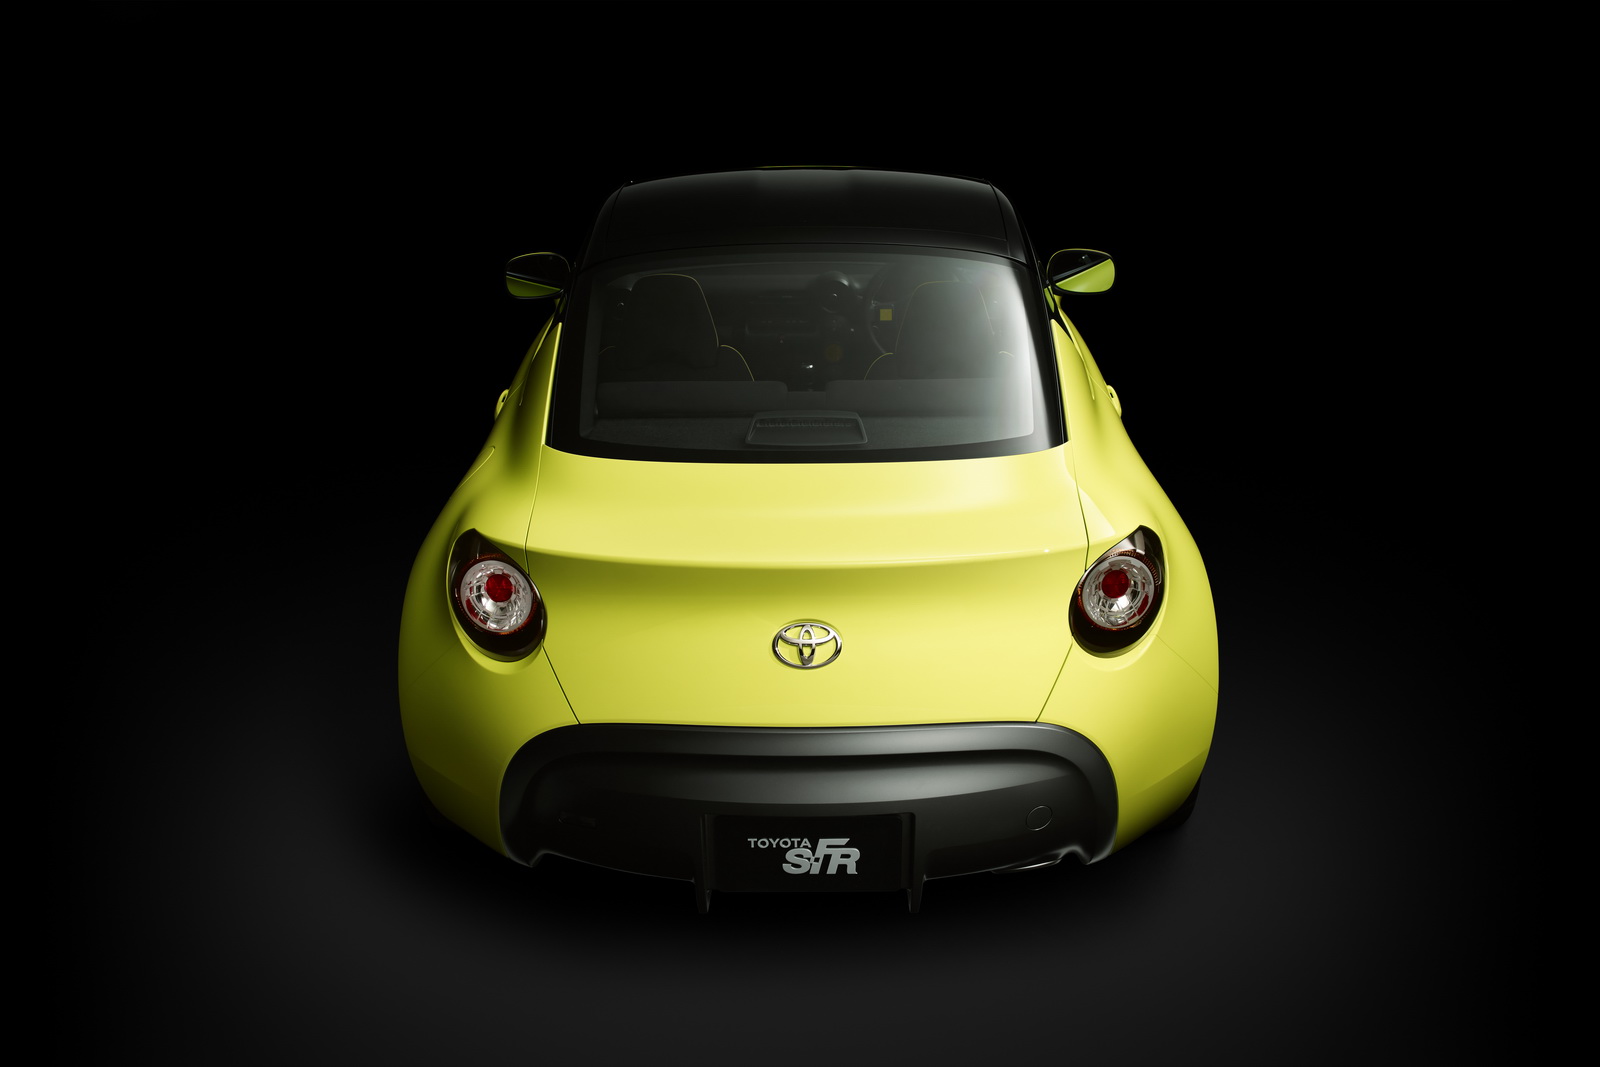 2015 Toyota S FR Concept